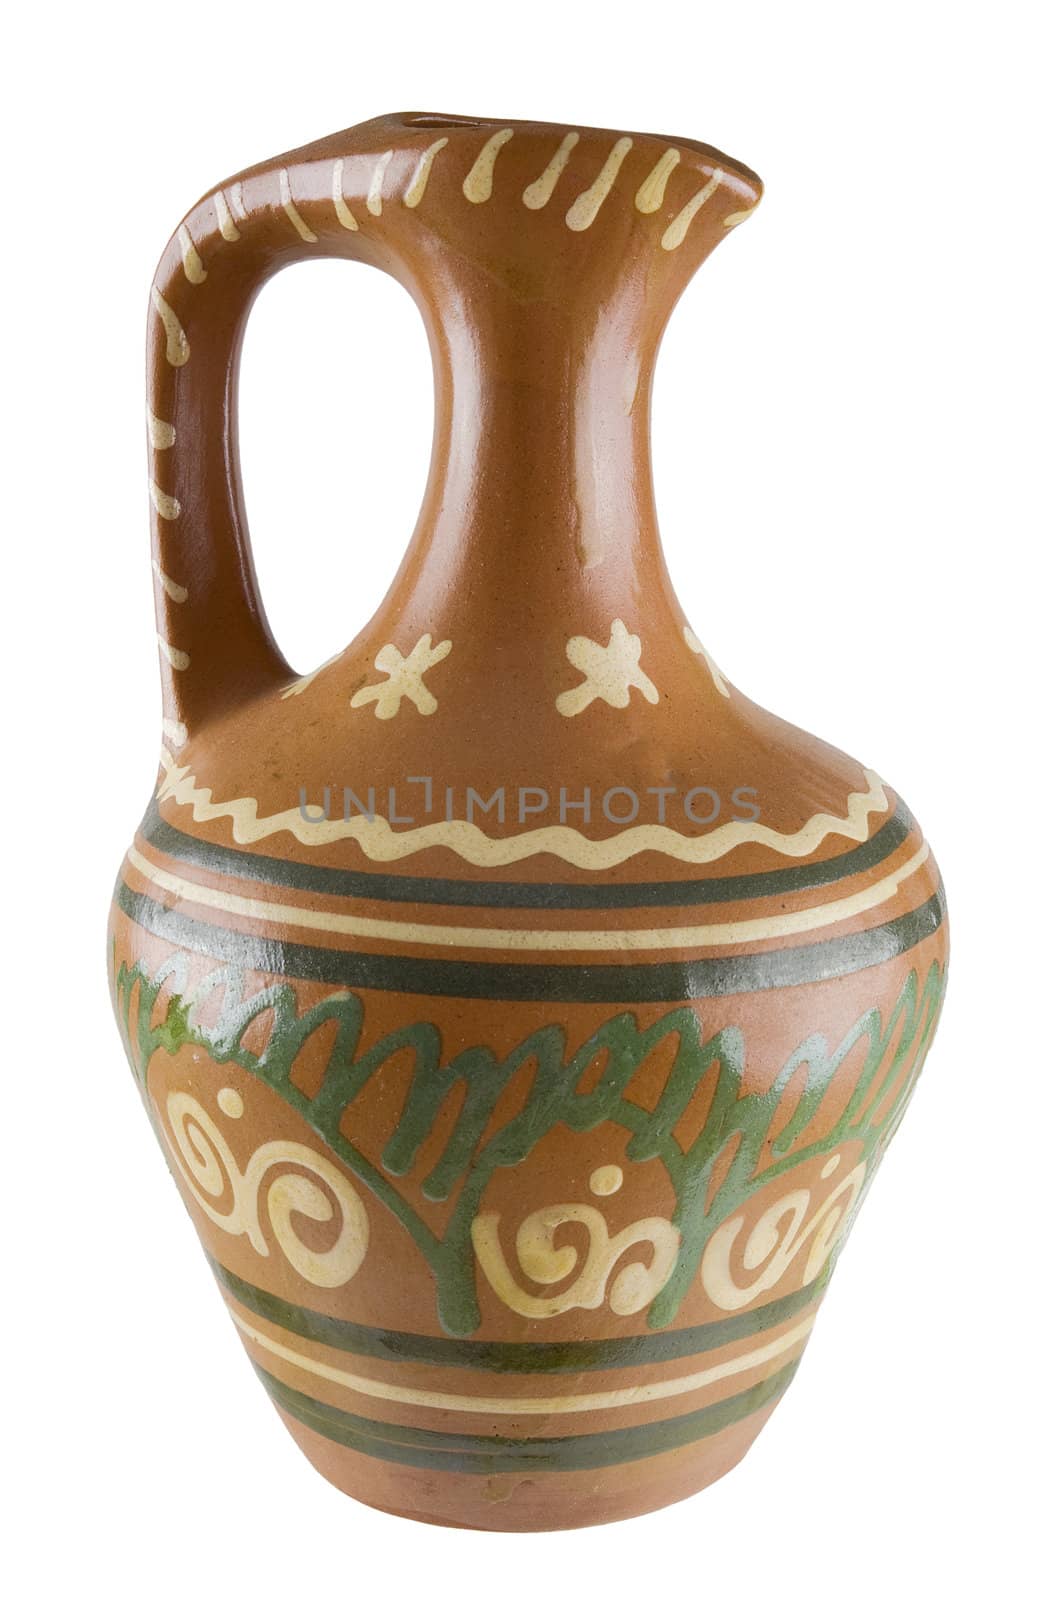 The big ceramic jug on a white background